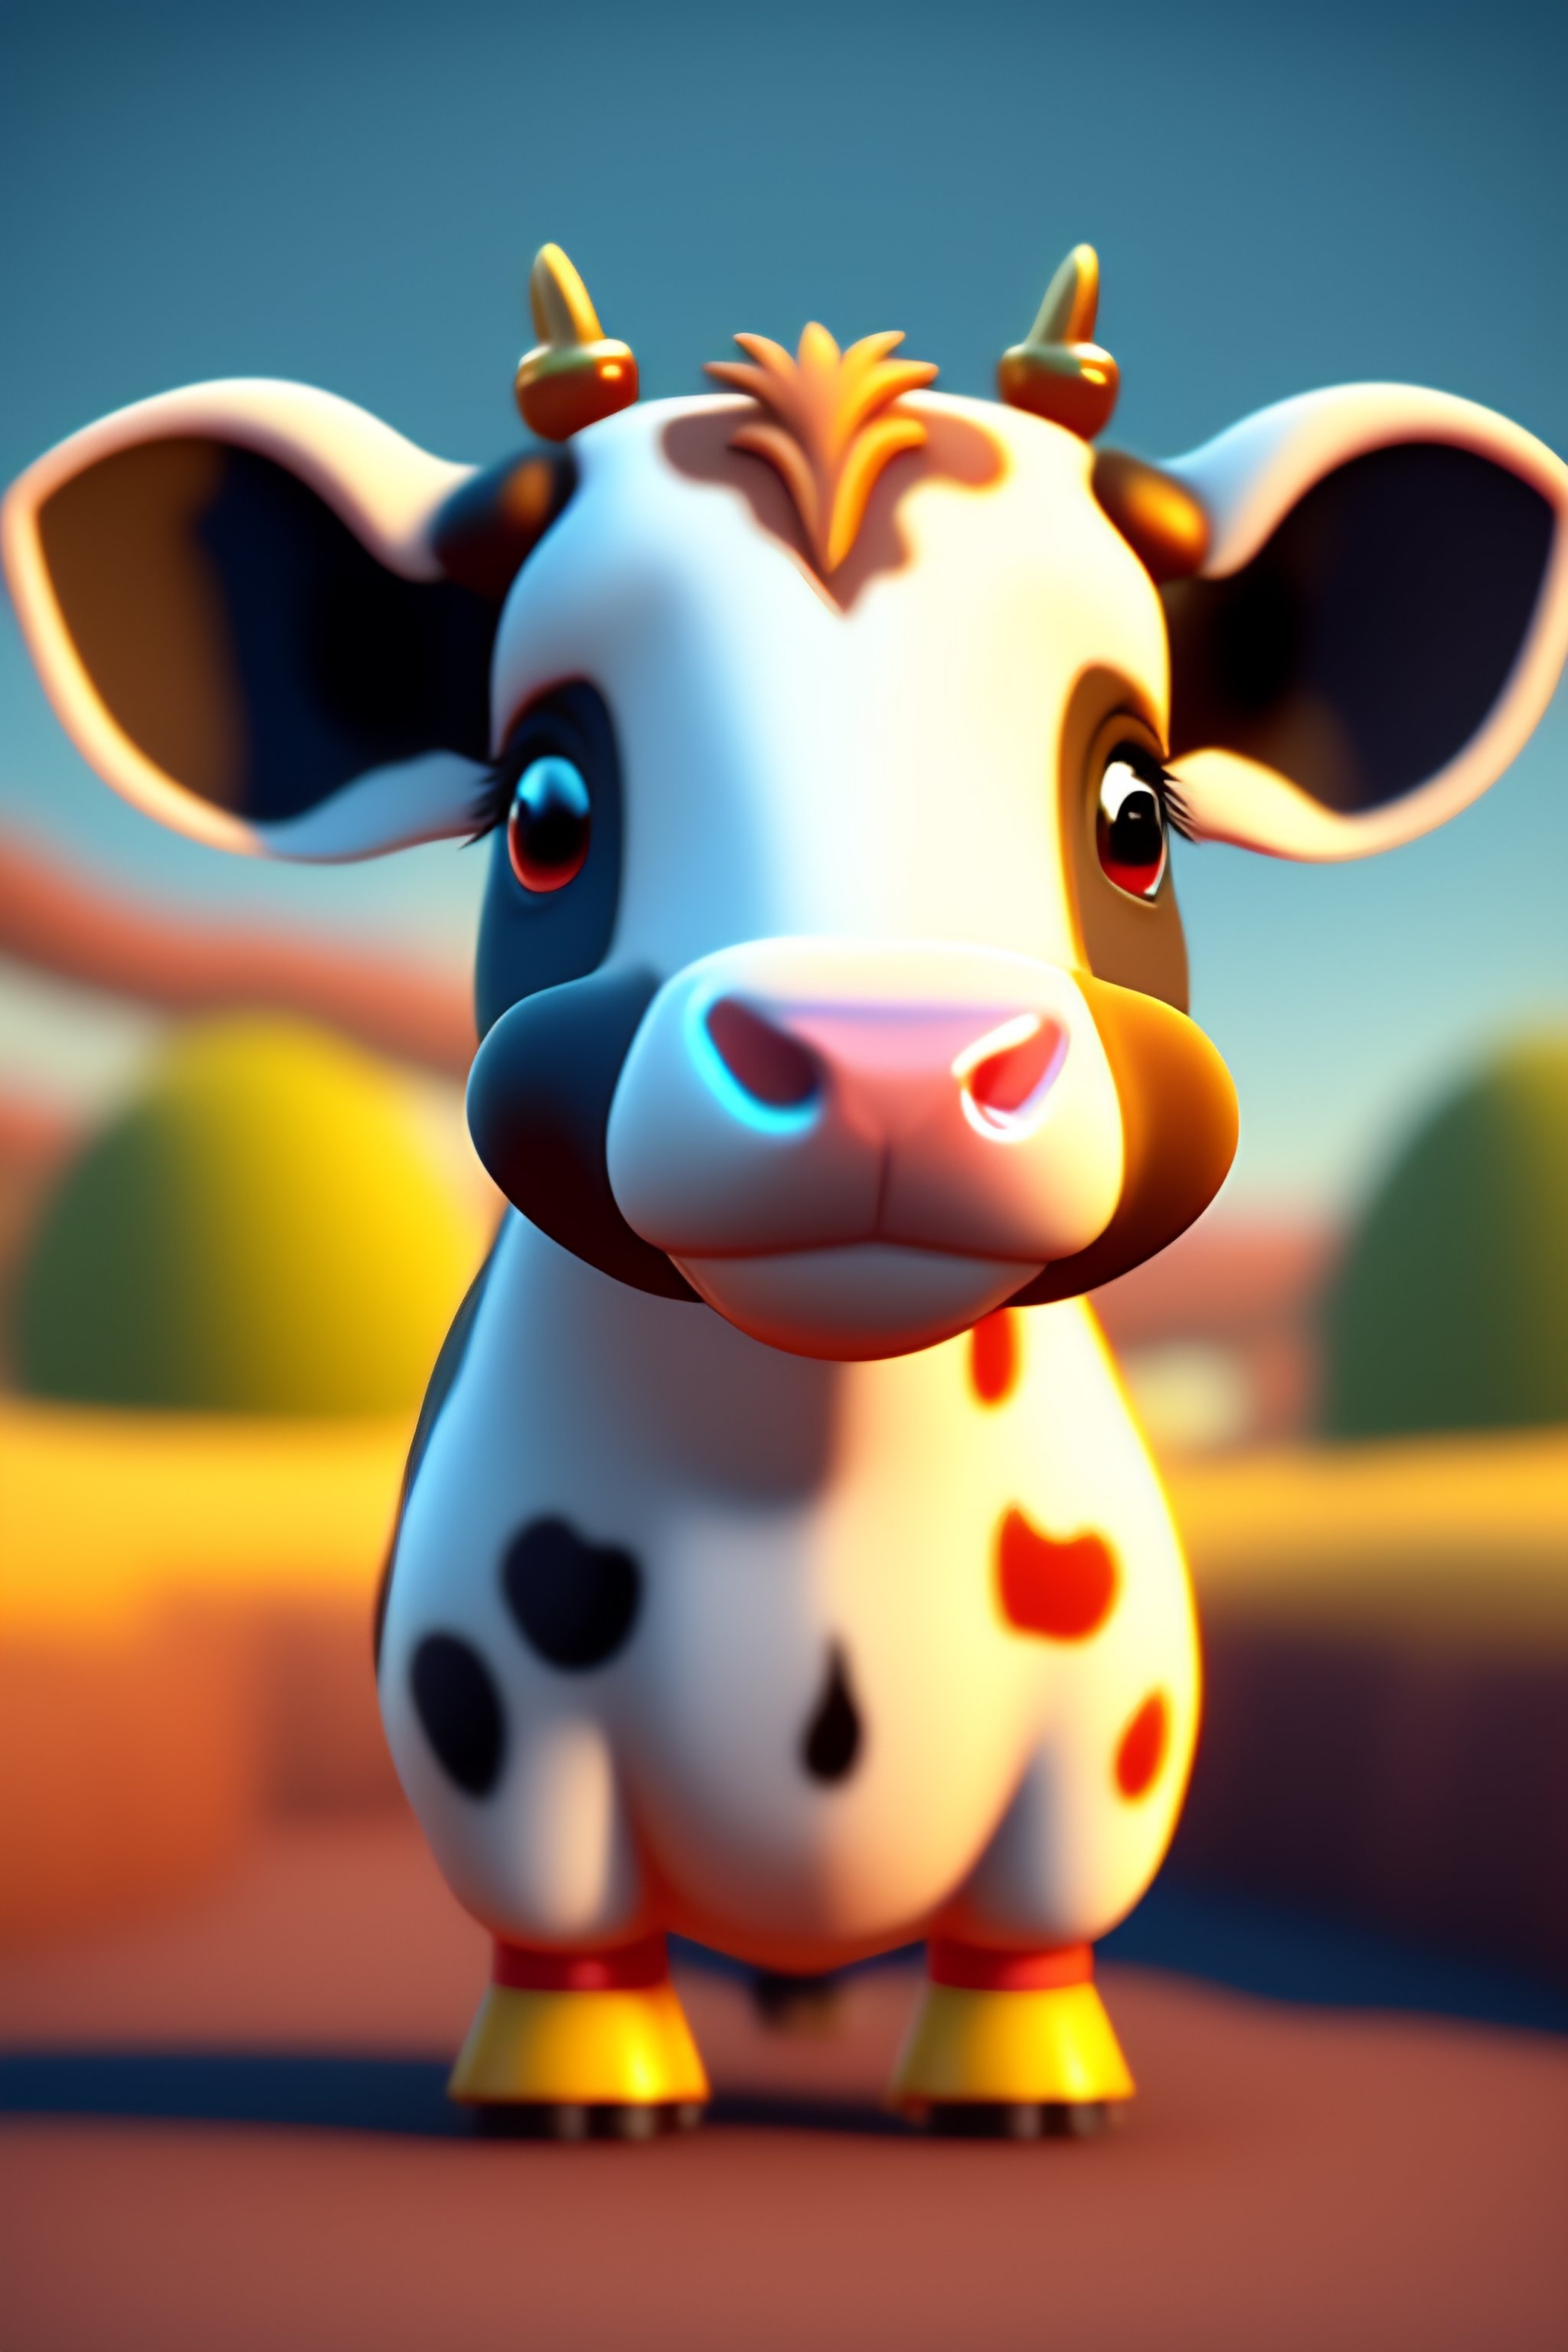 cow cartoon characters